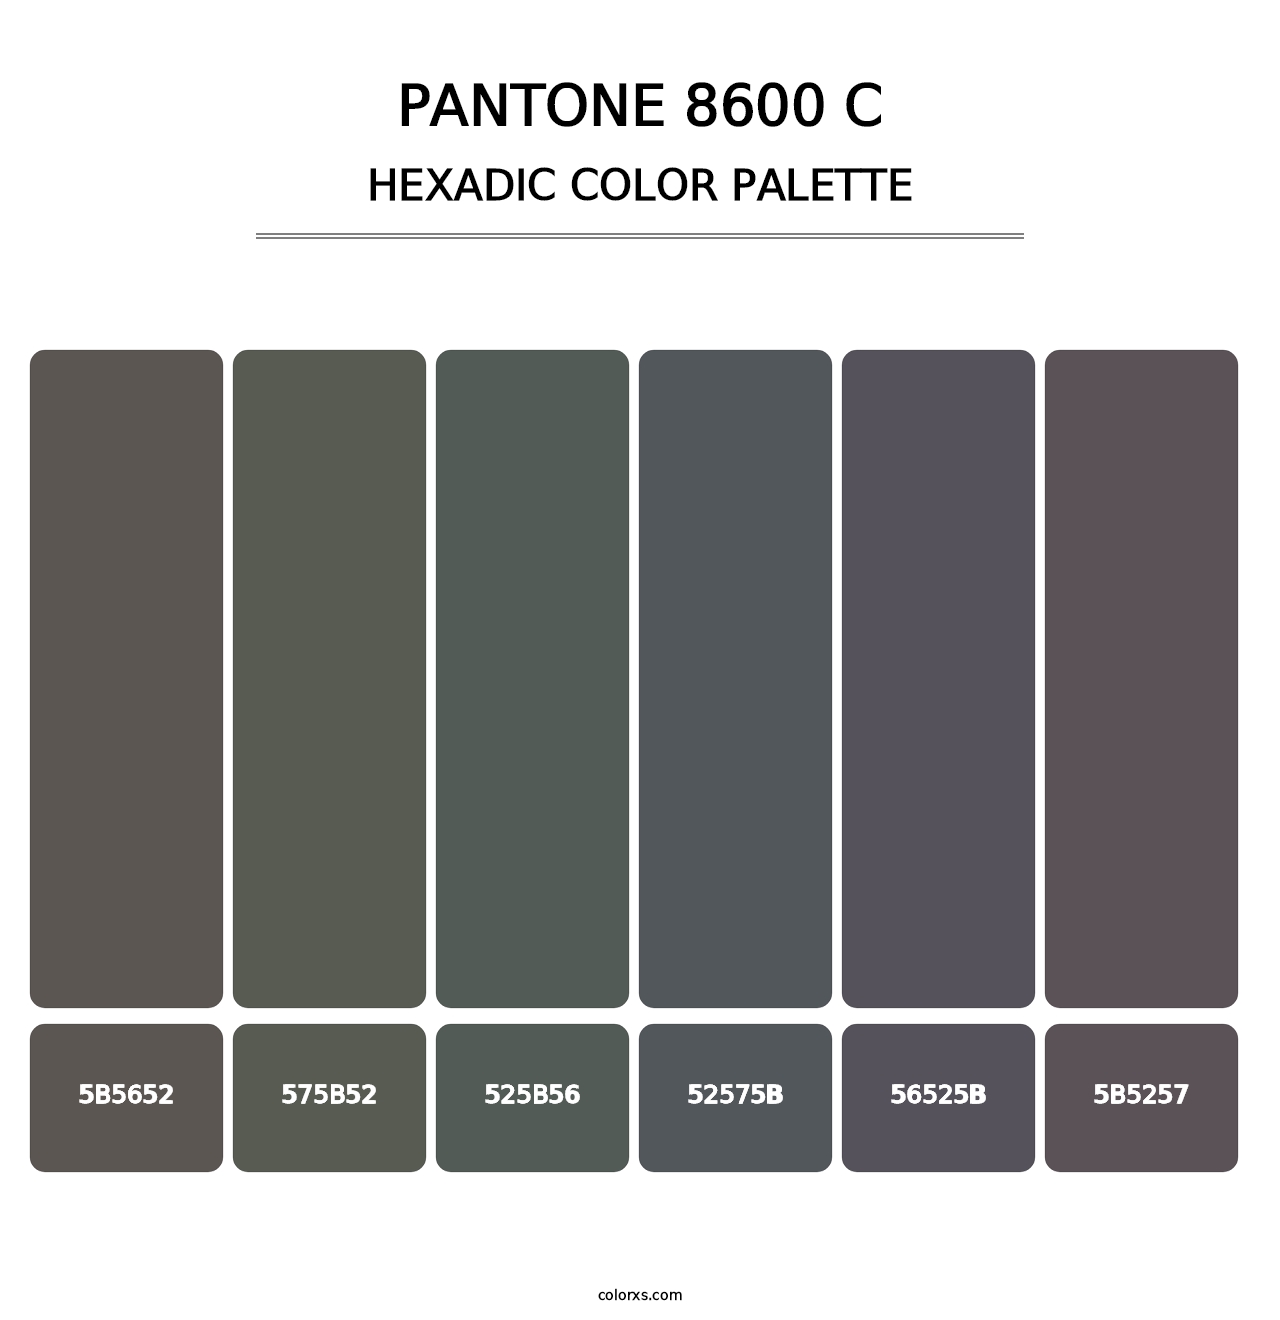 PANTONE 8600 C - Hexadic Color Palette